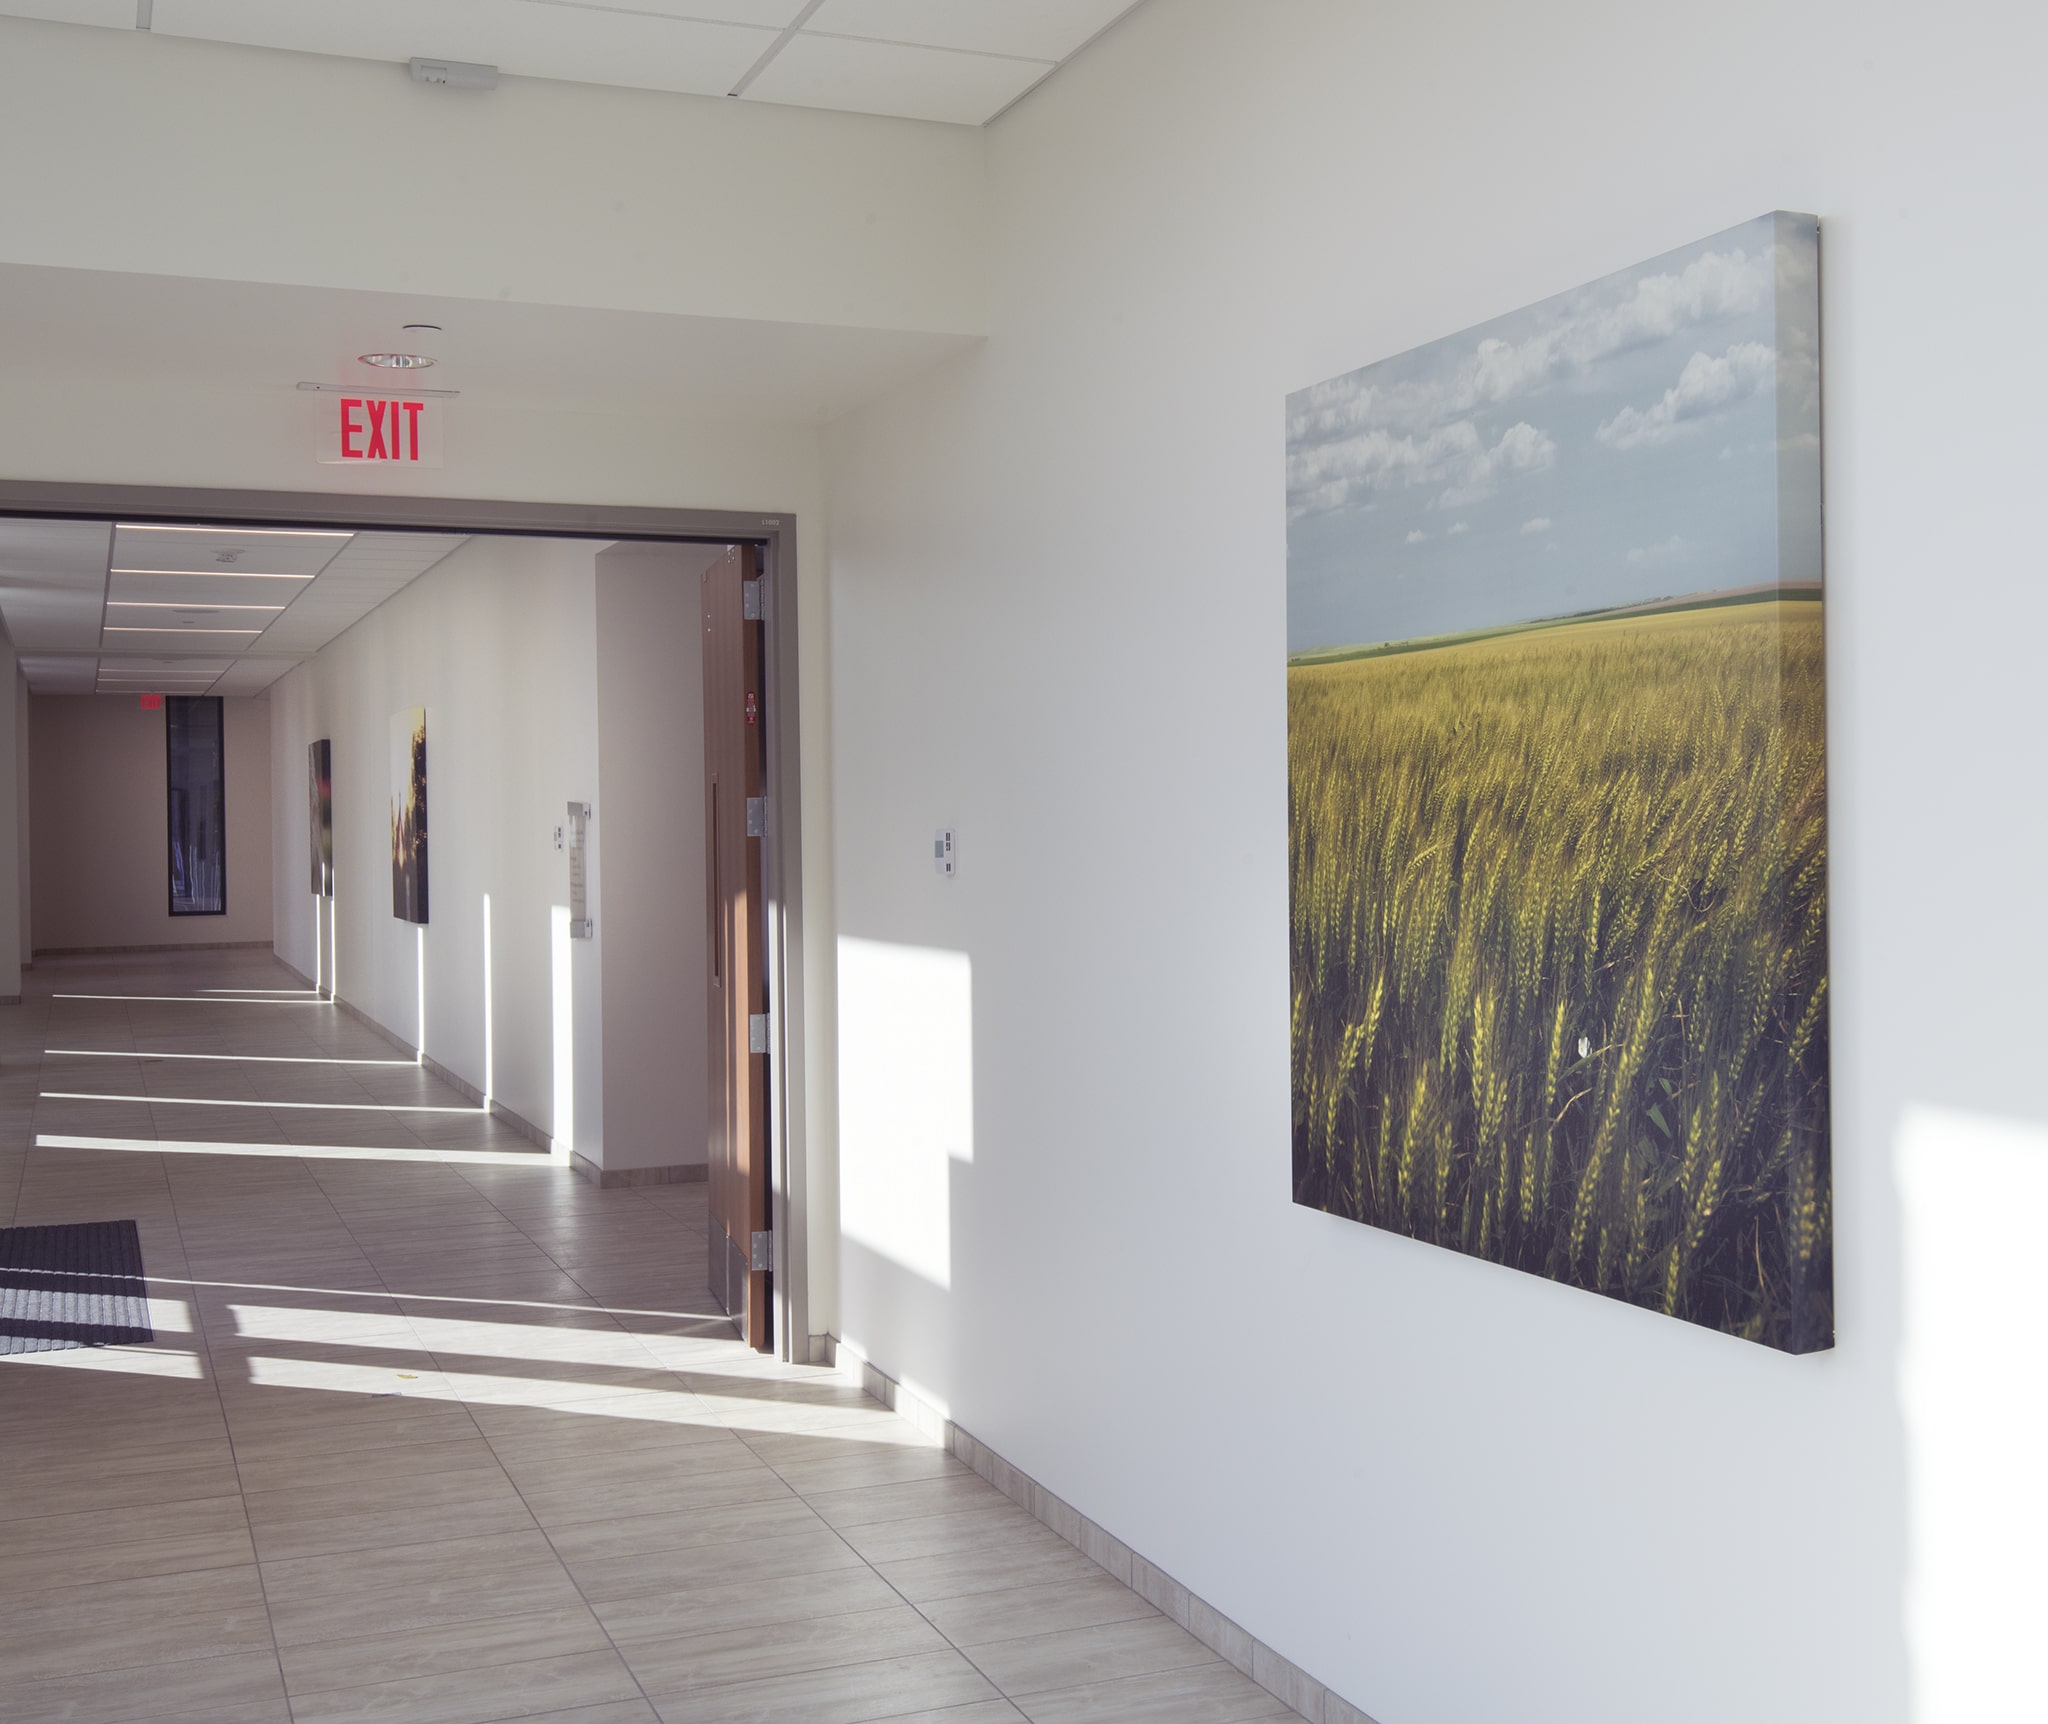 Hospital Hallway with Art